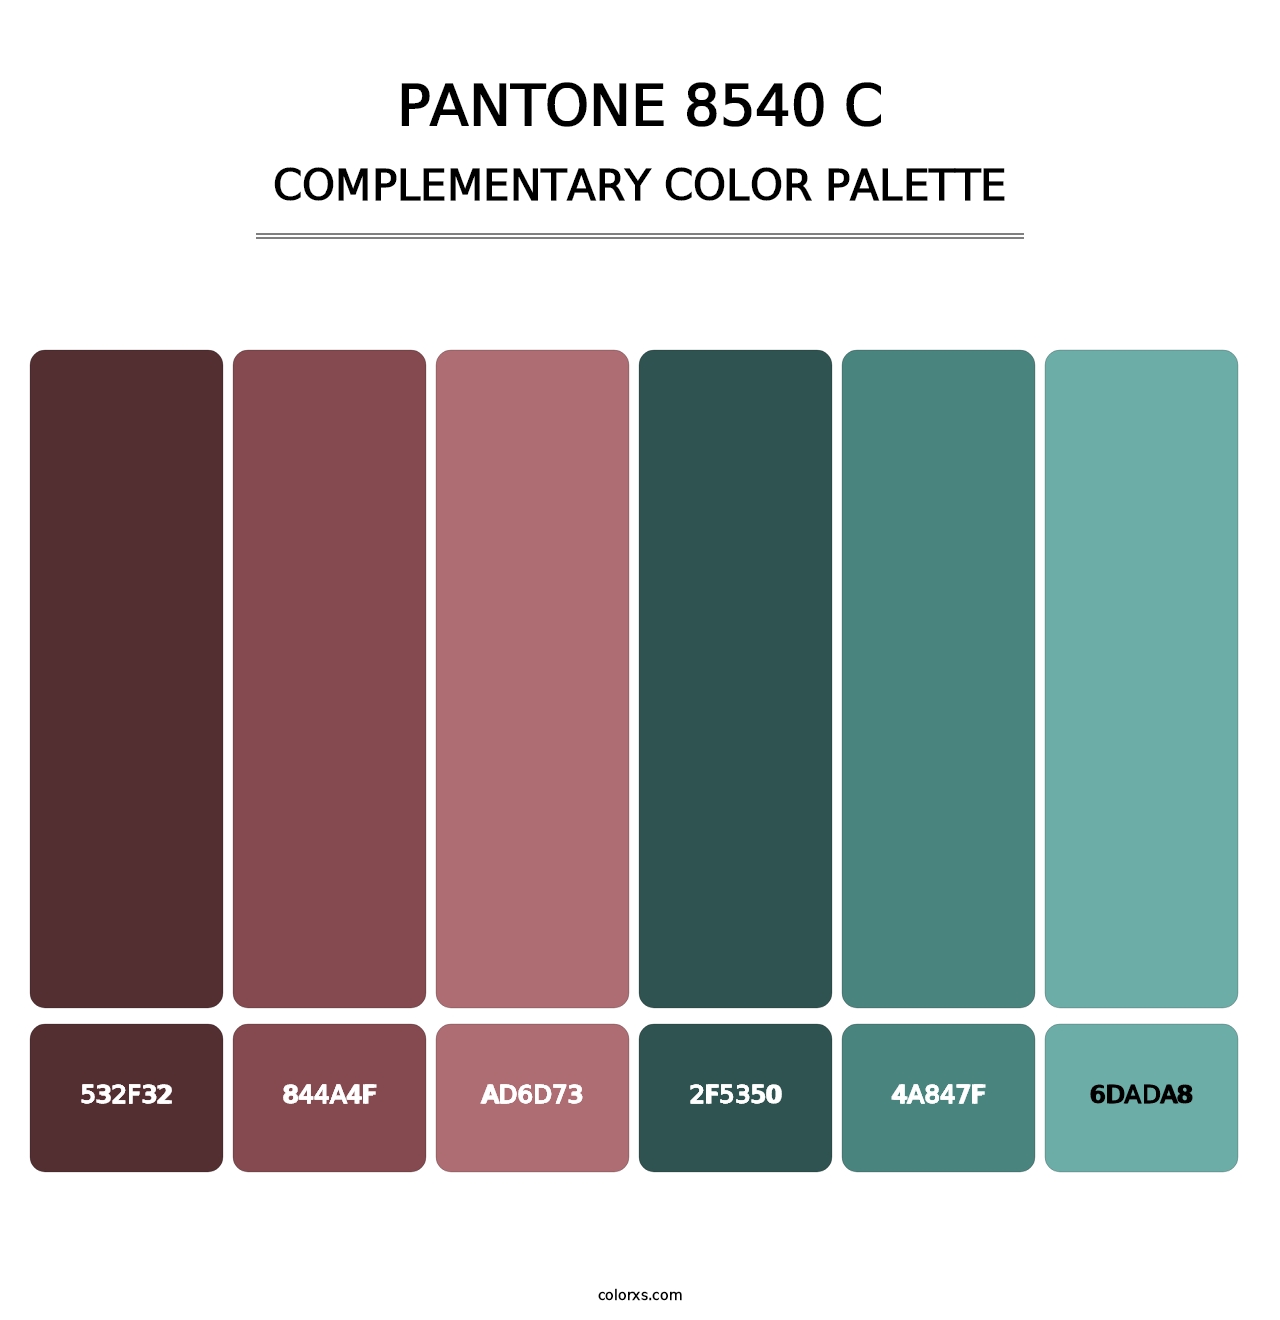 PANTONE 8540 C - Complementary Color Palette